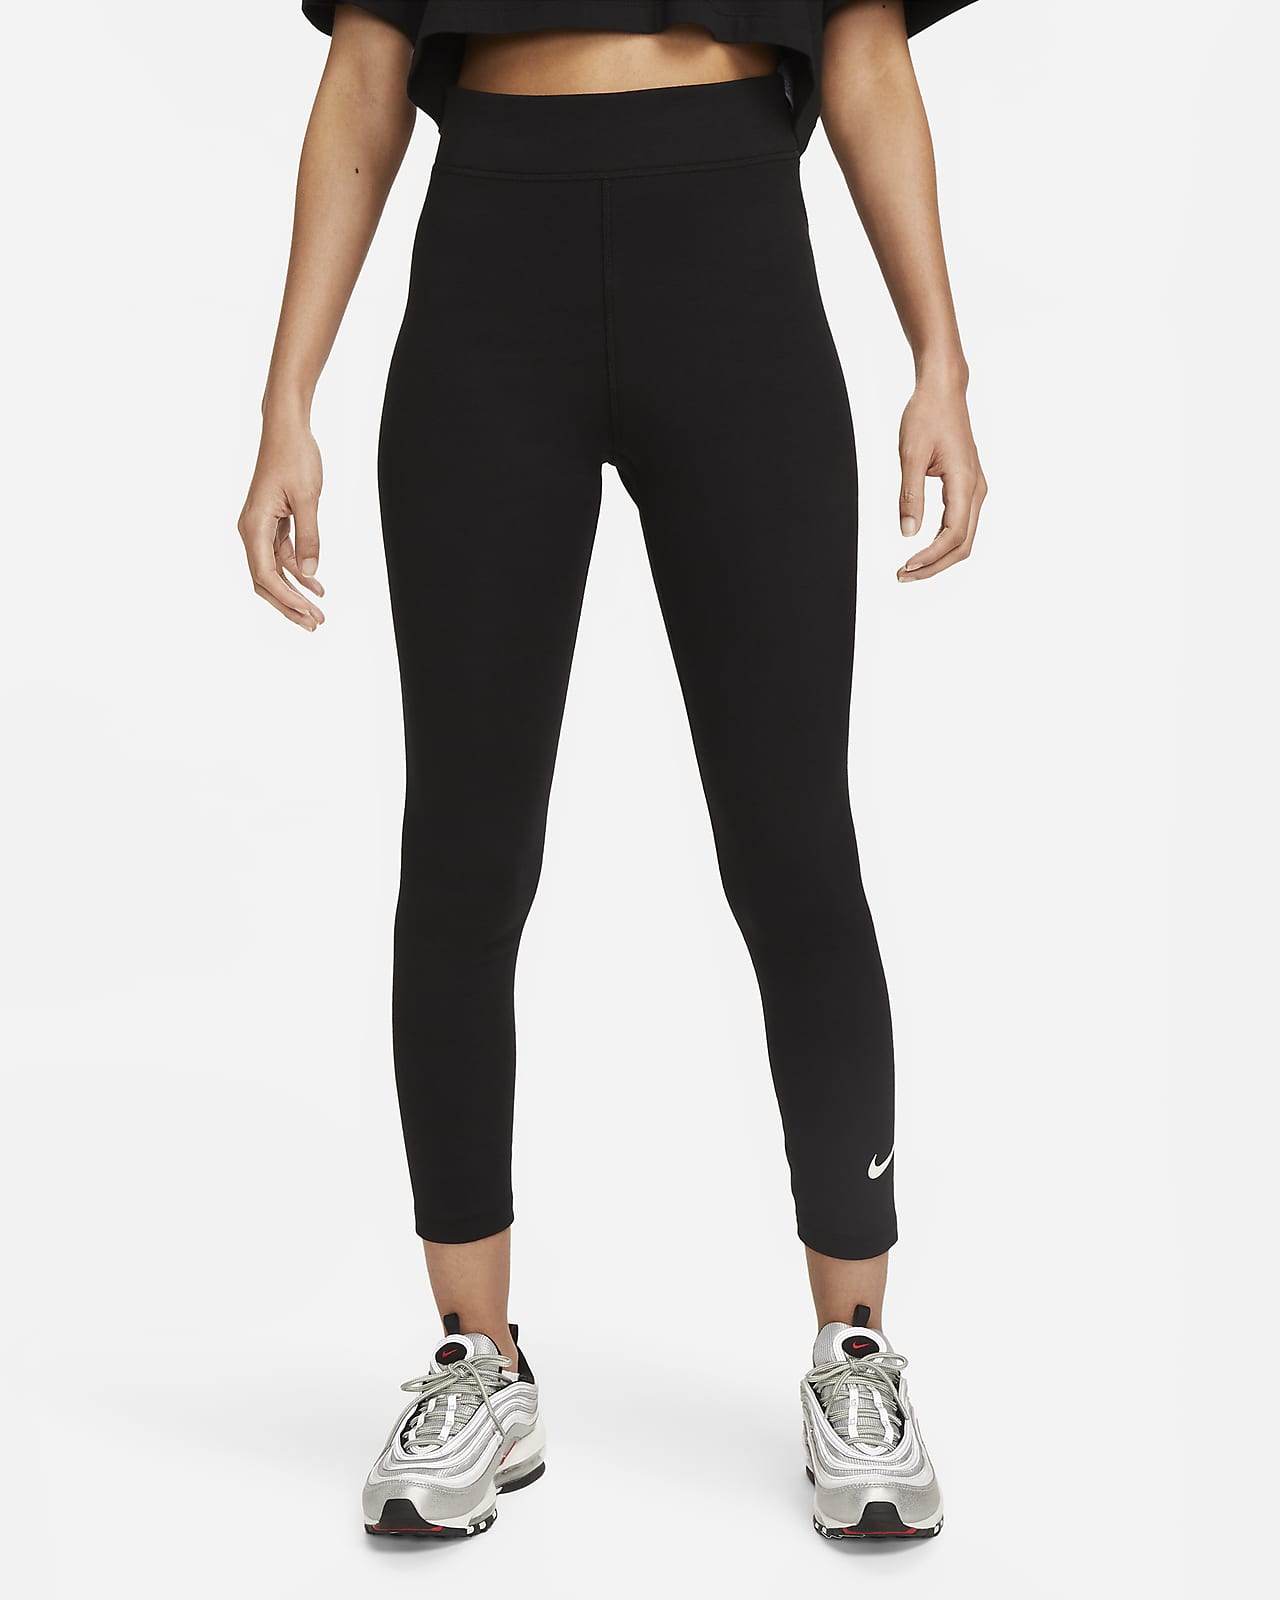 Legging 7/8 taille haute Nike Sportswear Classic pour femme